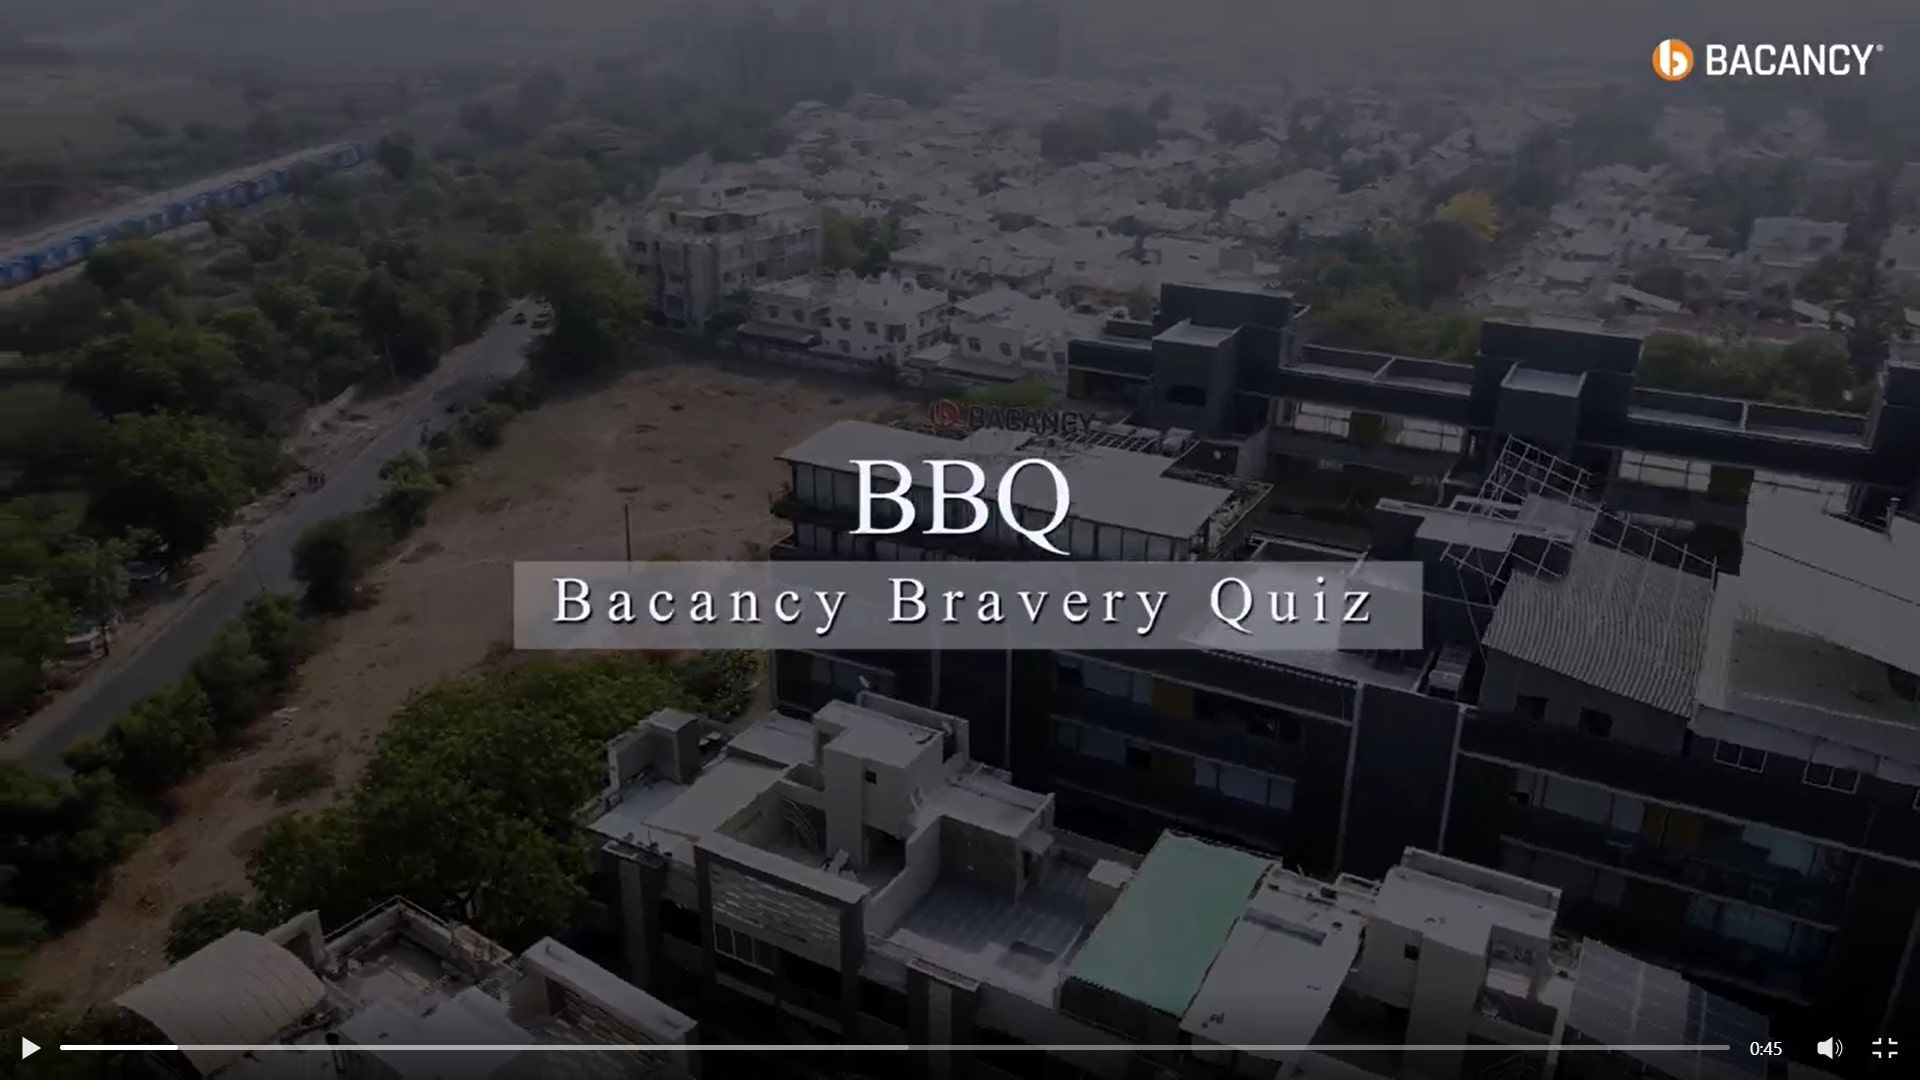 BBQ – Bacancy Bravery Quiz